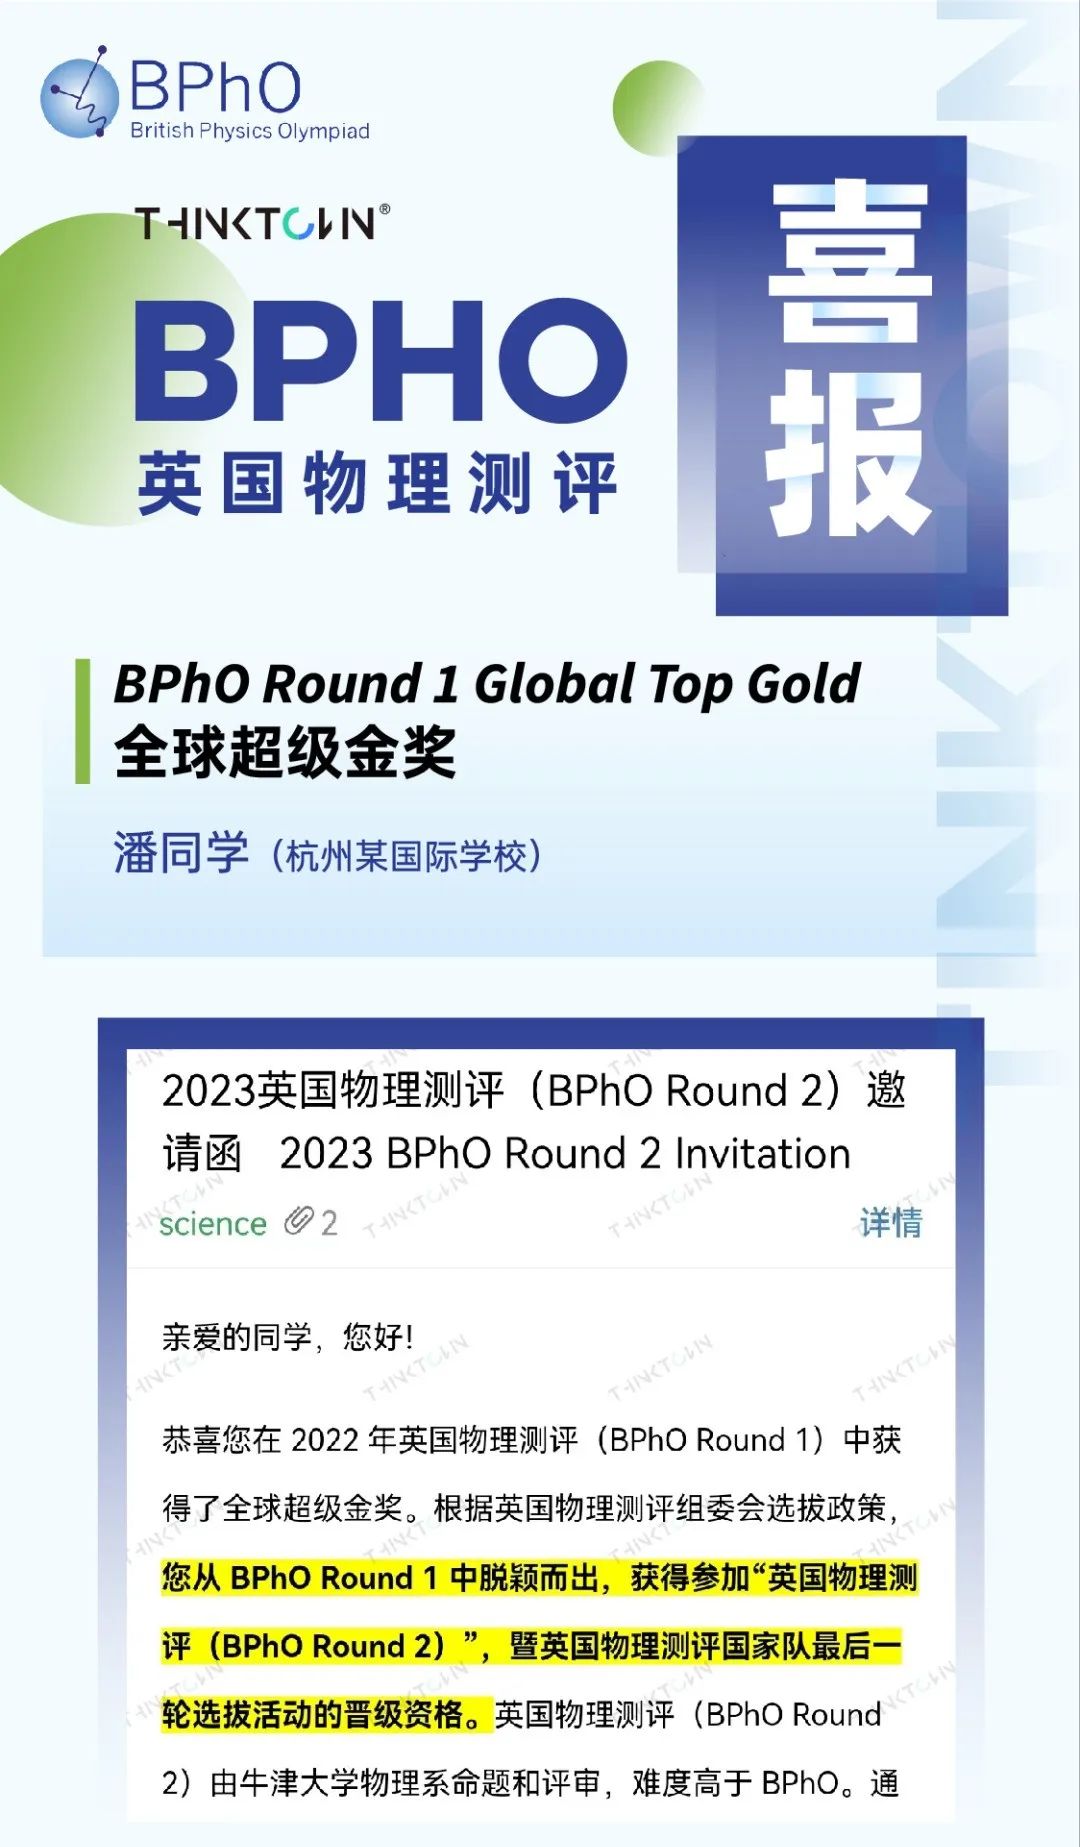 BPHO Round1中国区出分，来看看和往年都有哪些不同？